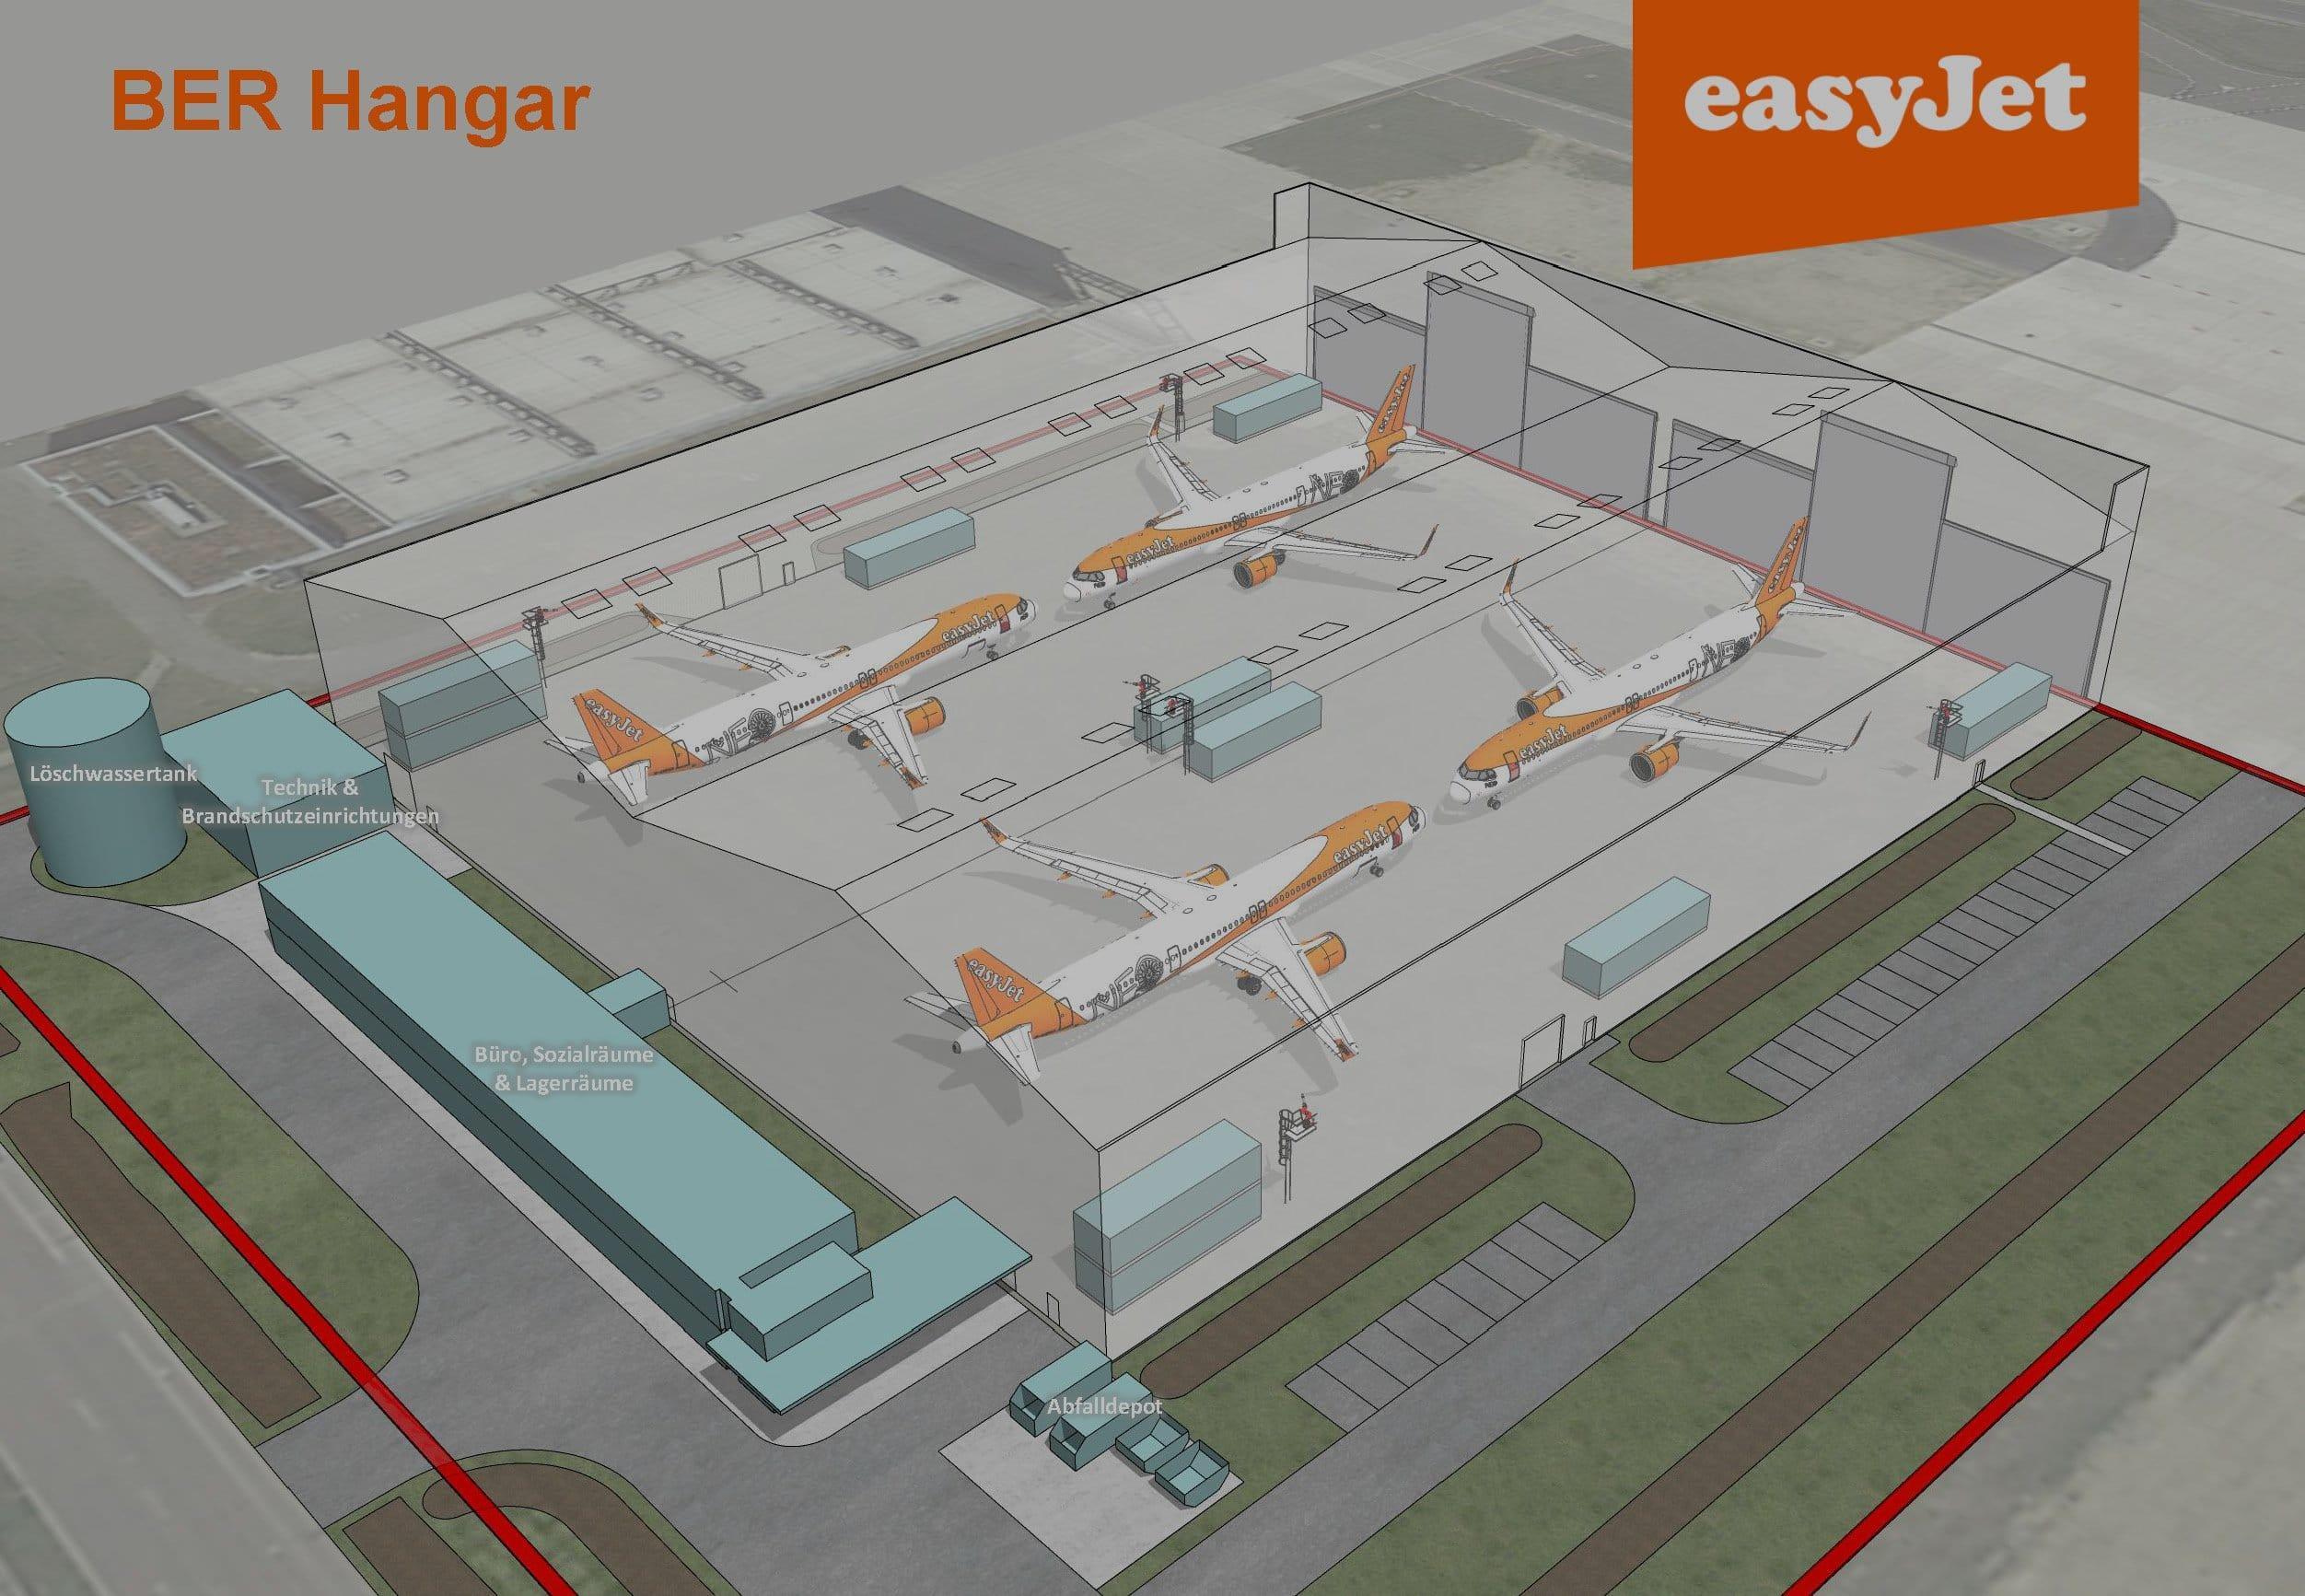 easyJet and Berlin Brandenburg Sign Lease Deal for New Hangar